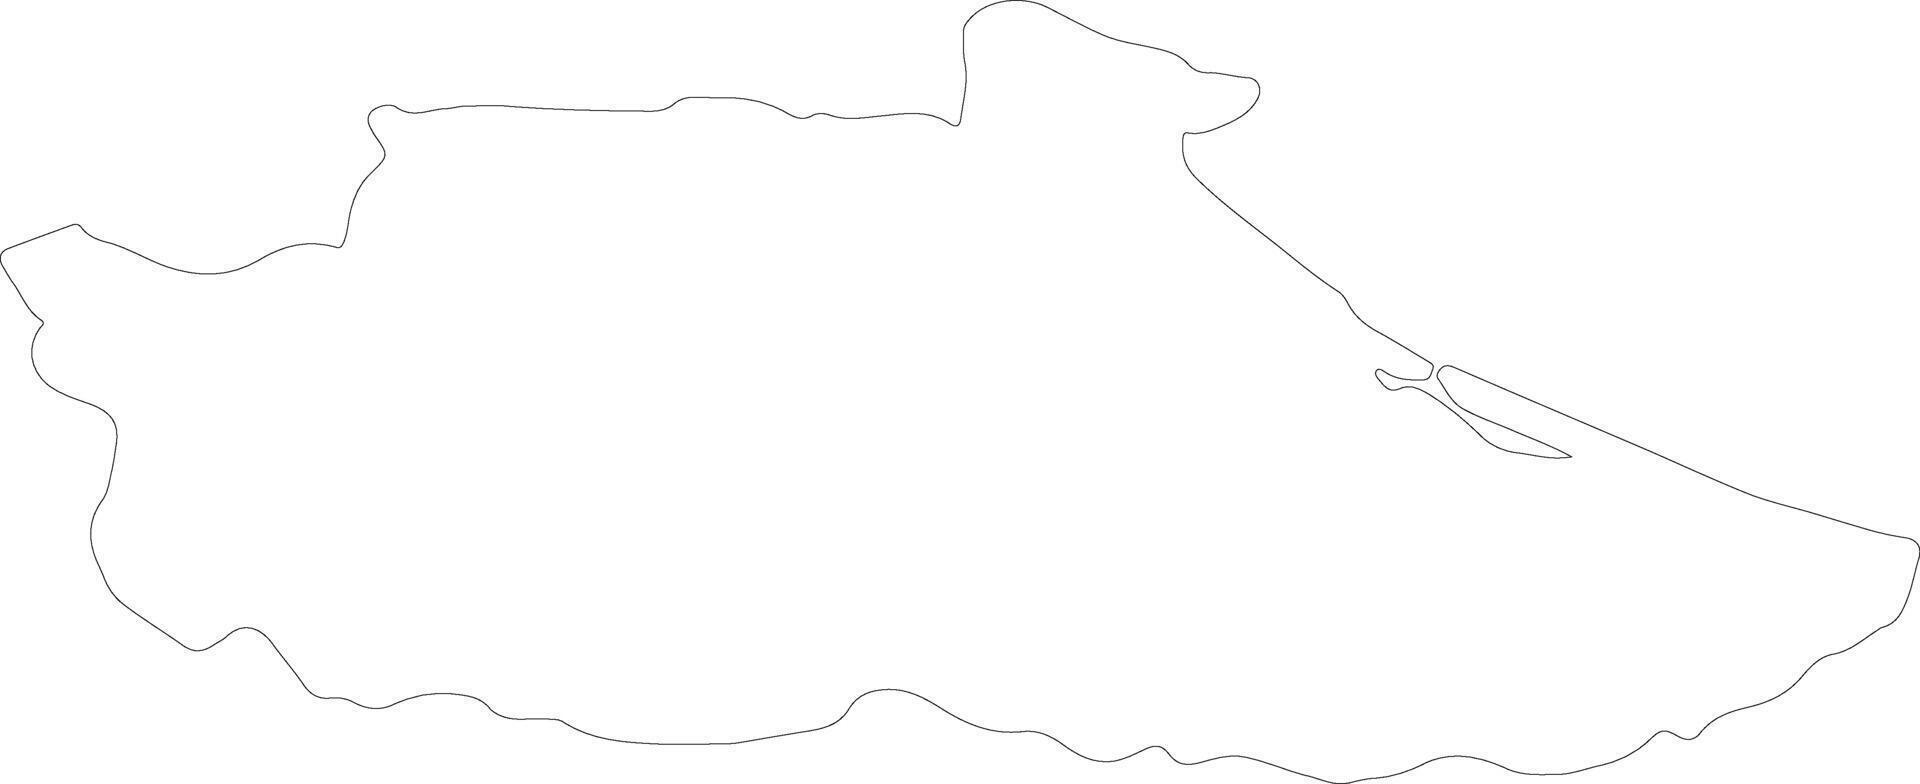 Miranda Venezuela outline map vector